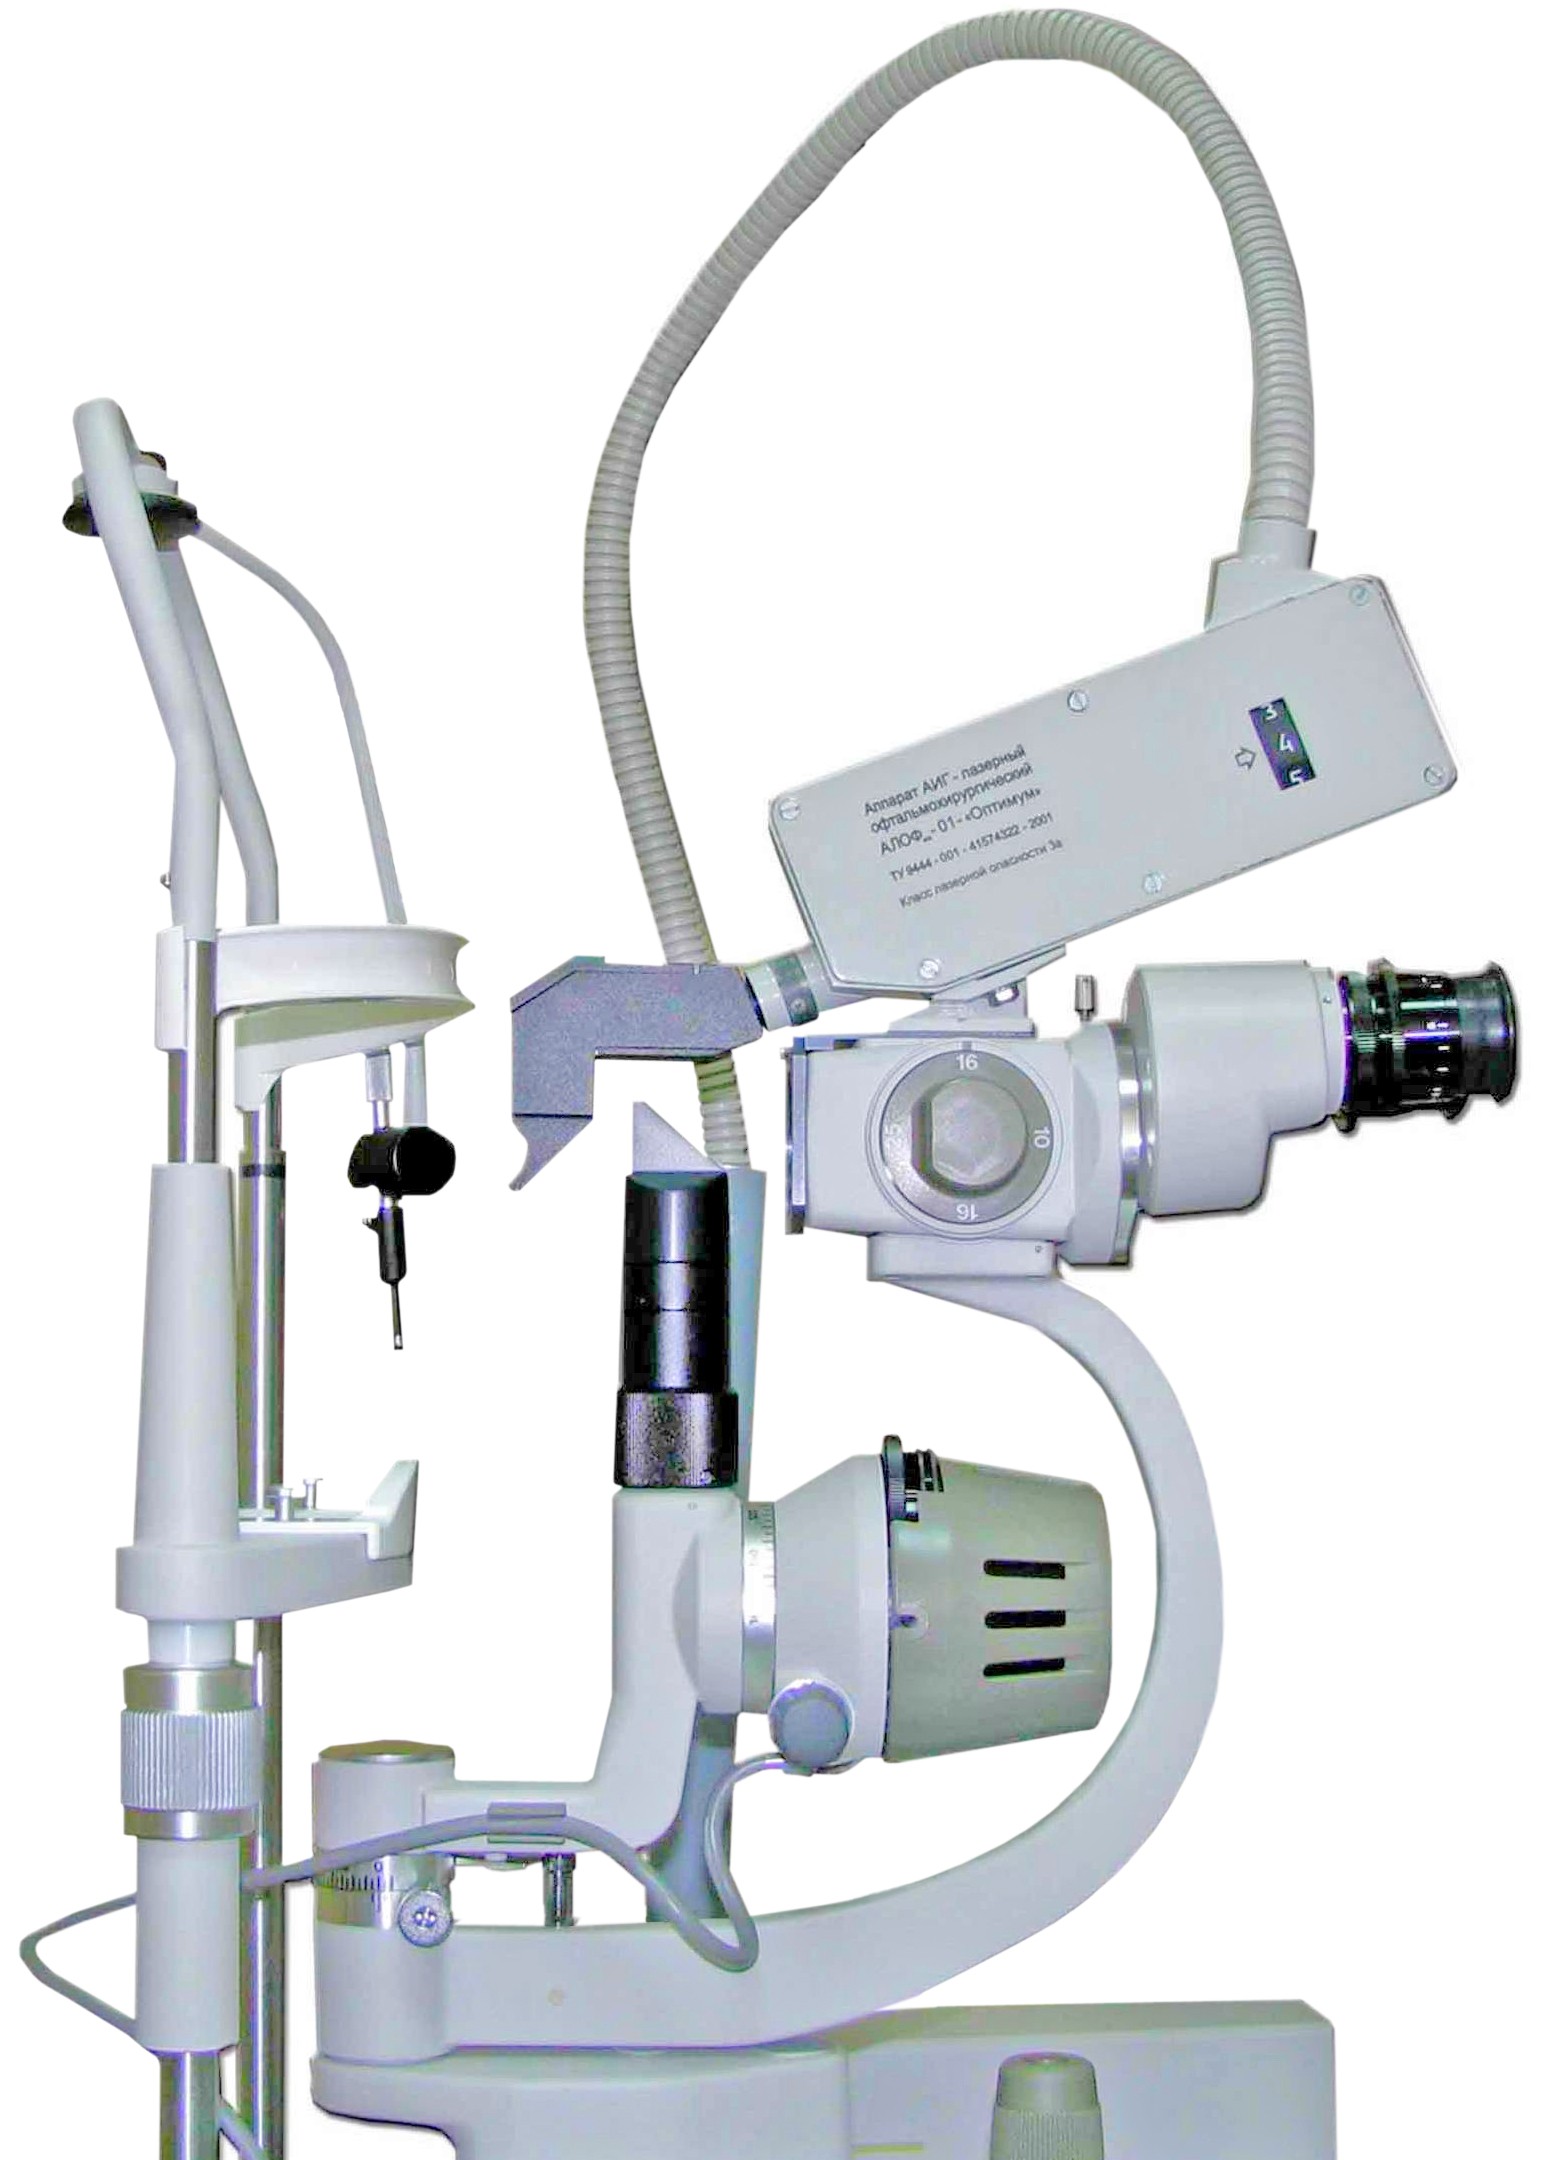 Лазерный офтальмохирургический аппарат АЛОФ мх-01 Оптимум